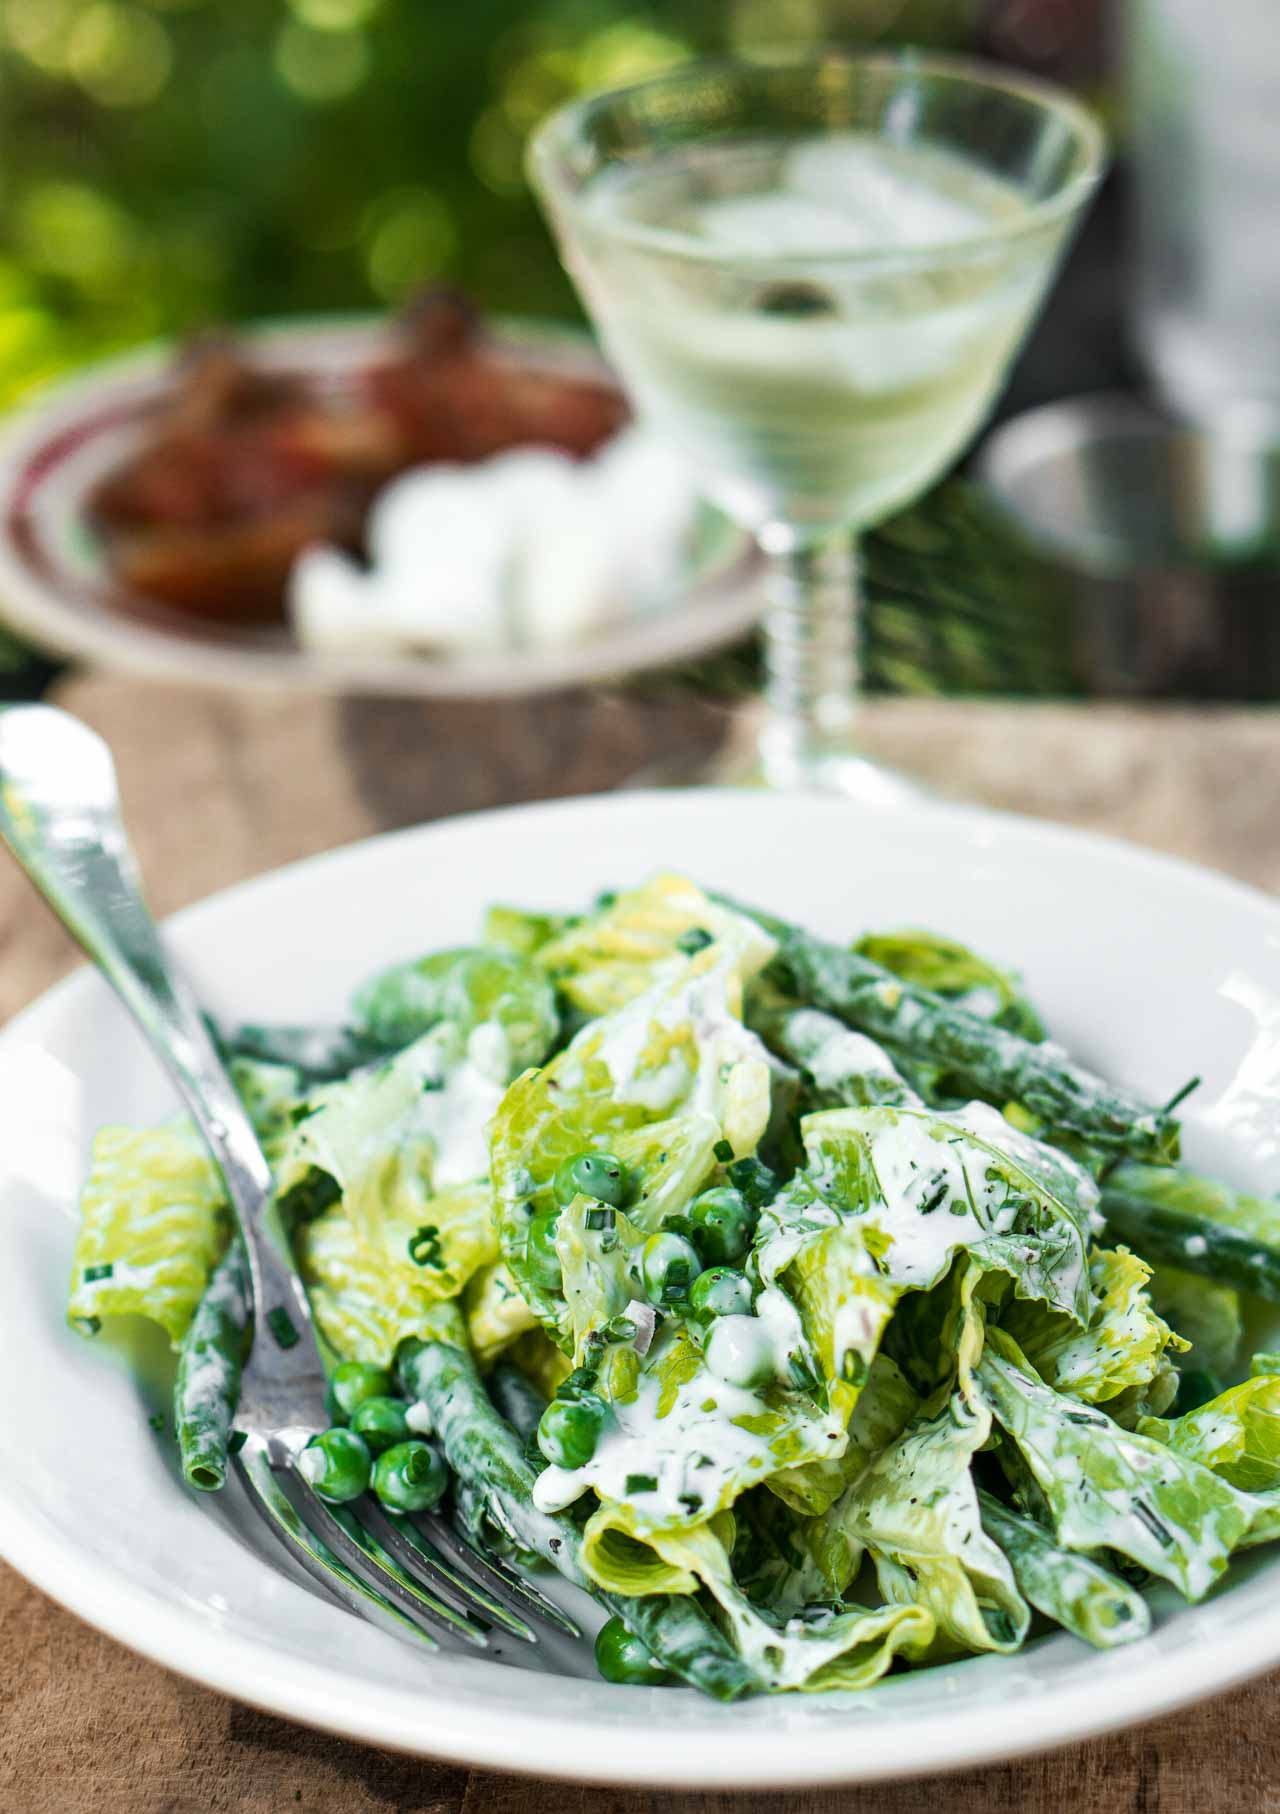 https://www.davidlebovitz.com/wp-content/uploads/2018/07/Buttermilk-ranch-dressing-salad-recipe-with-peas-19.jpg